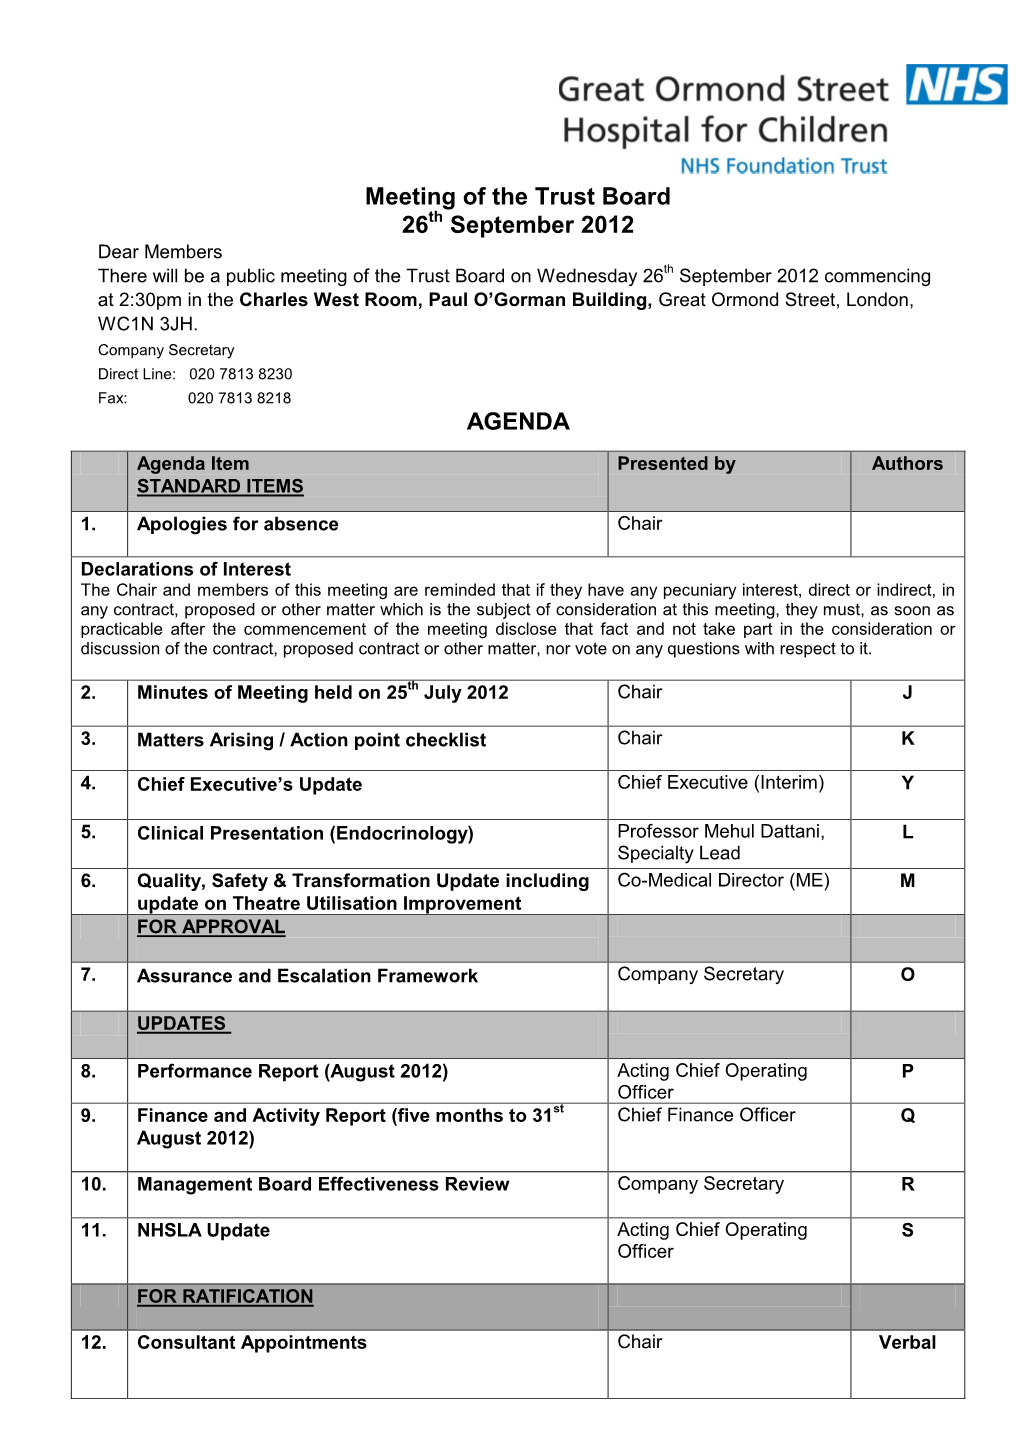 Meeting of the Trust Board 26 September 2012 AGENDA